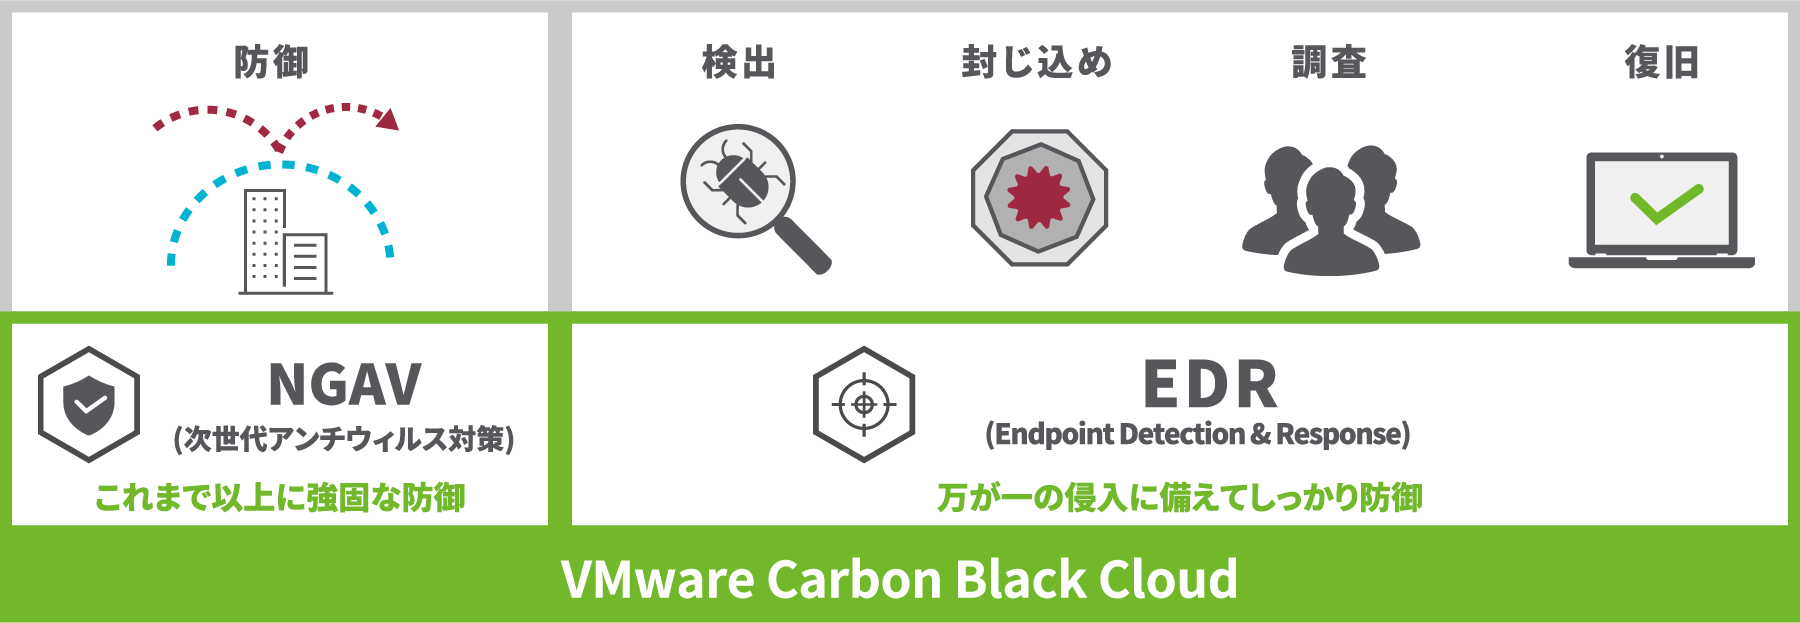 VMware Carbon Black Cloud